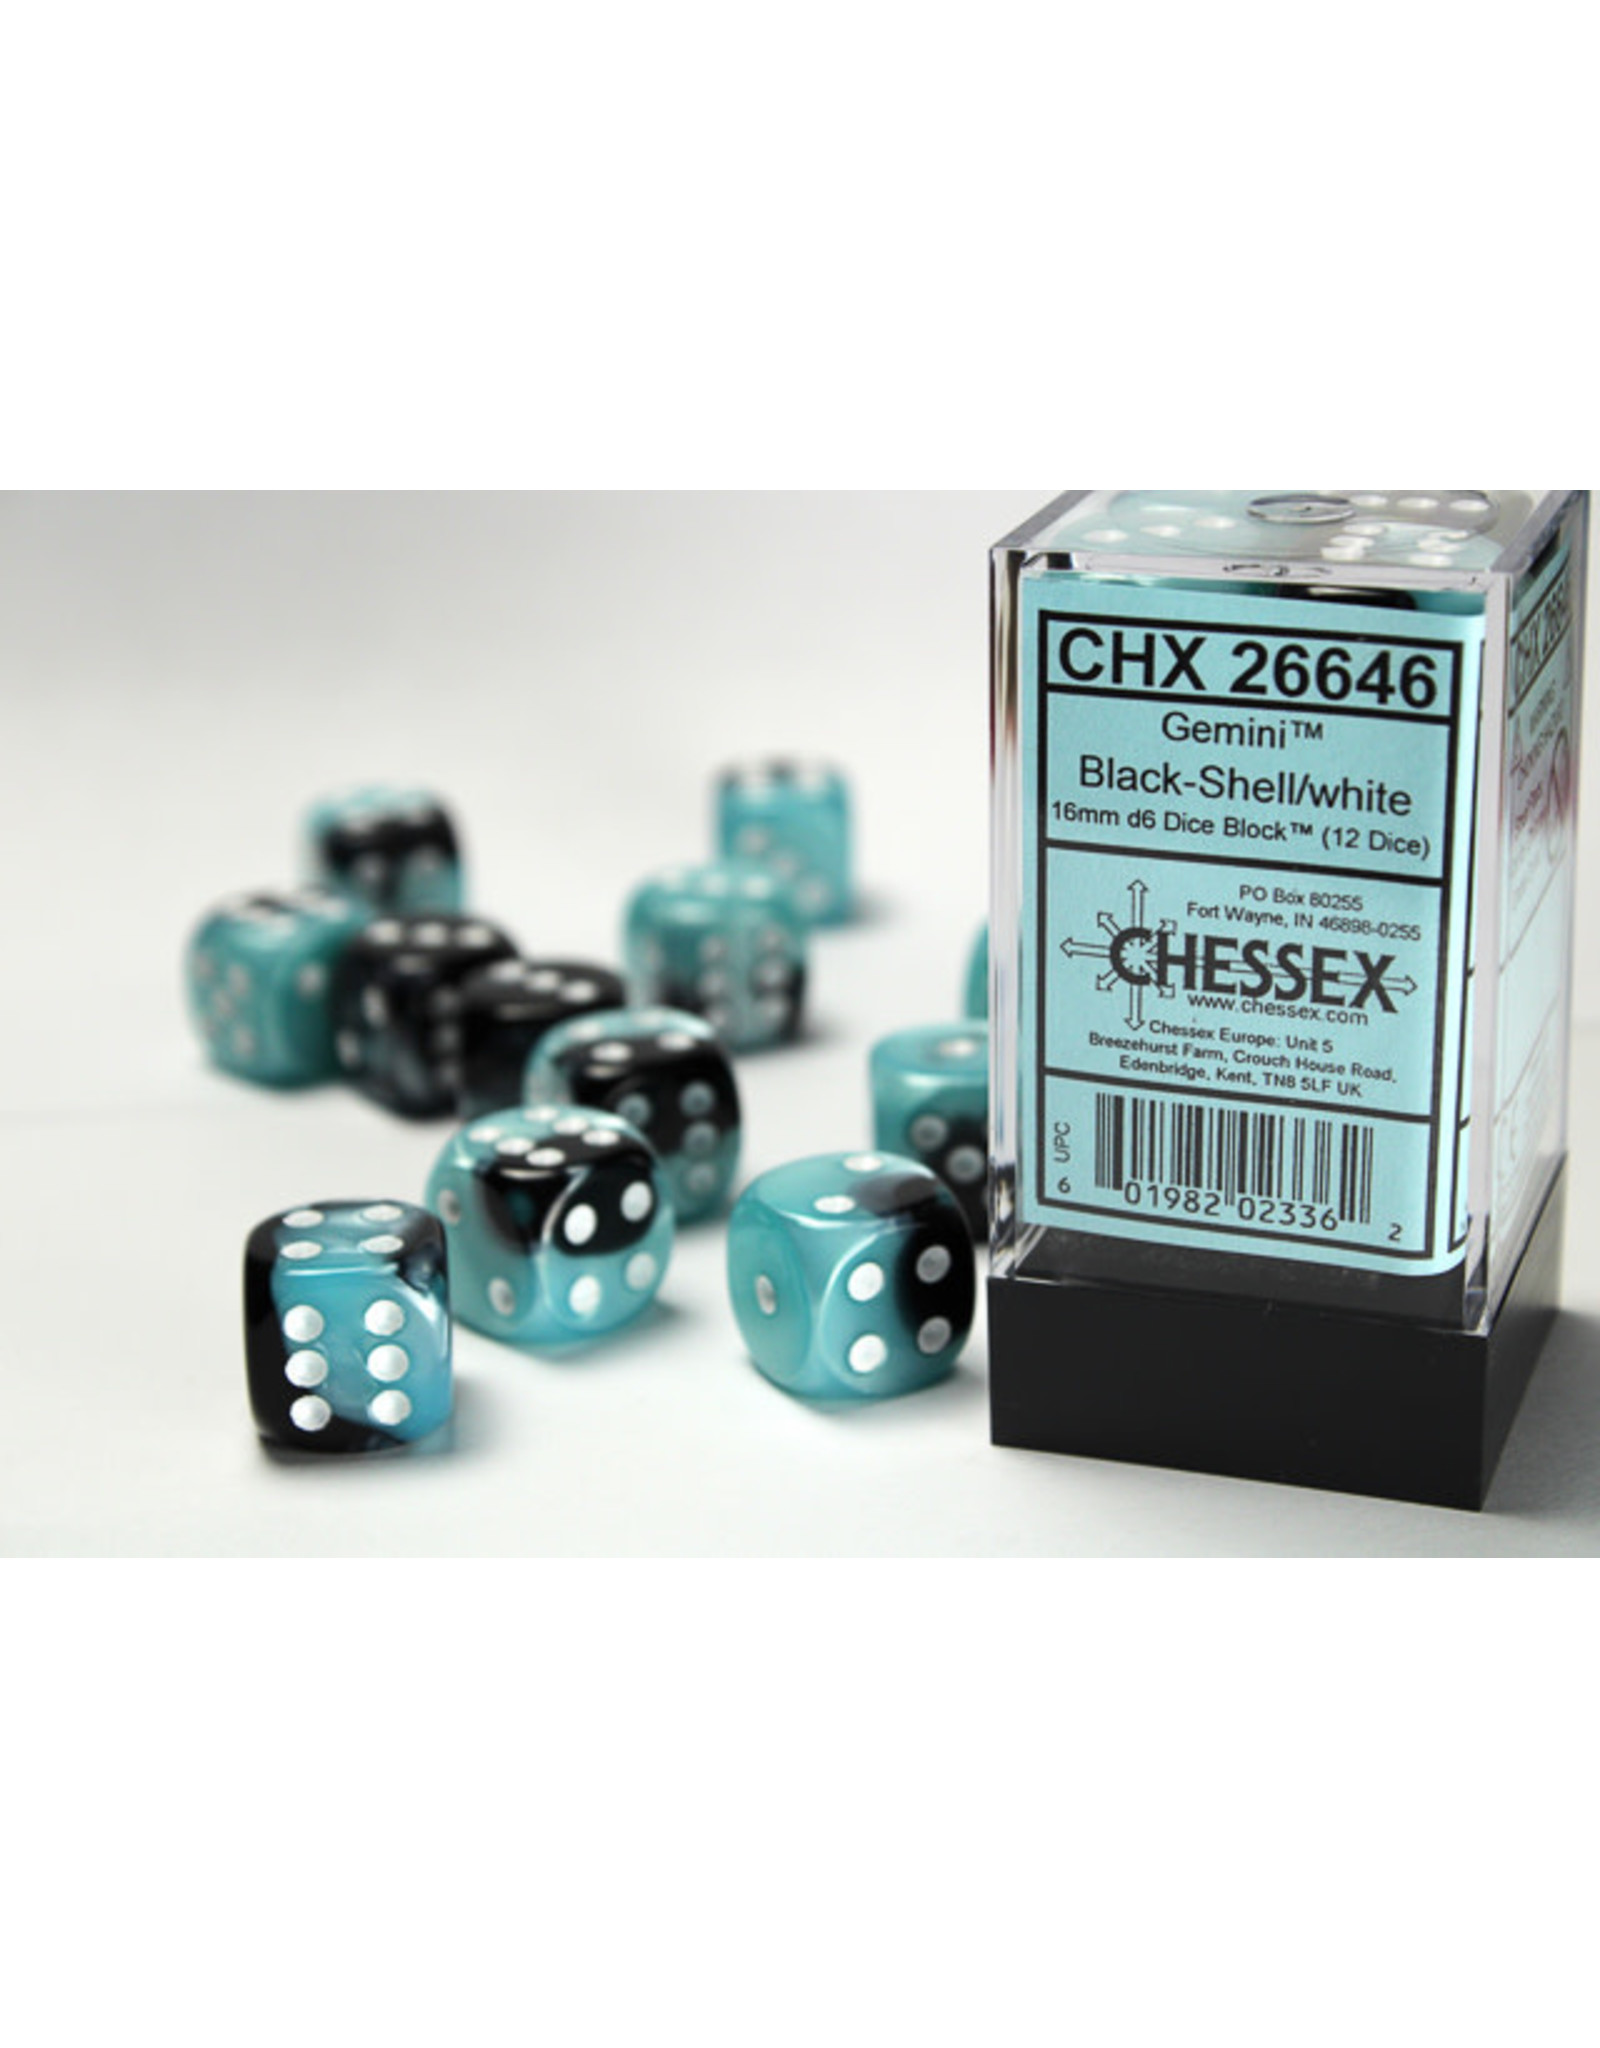 Chessex CHX26646 Gemini 5: 16mm D6 Black Shell/White (12)